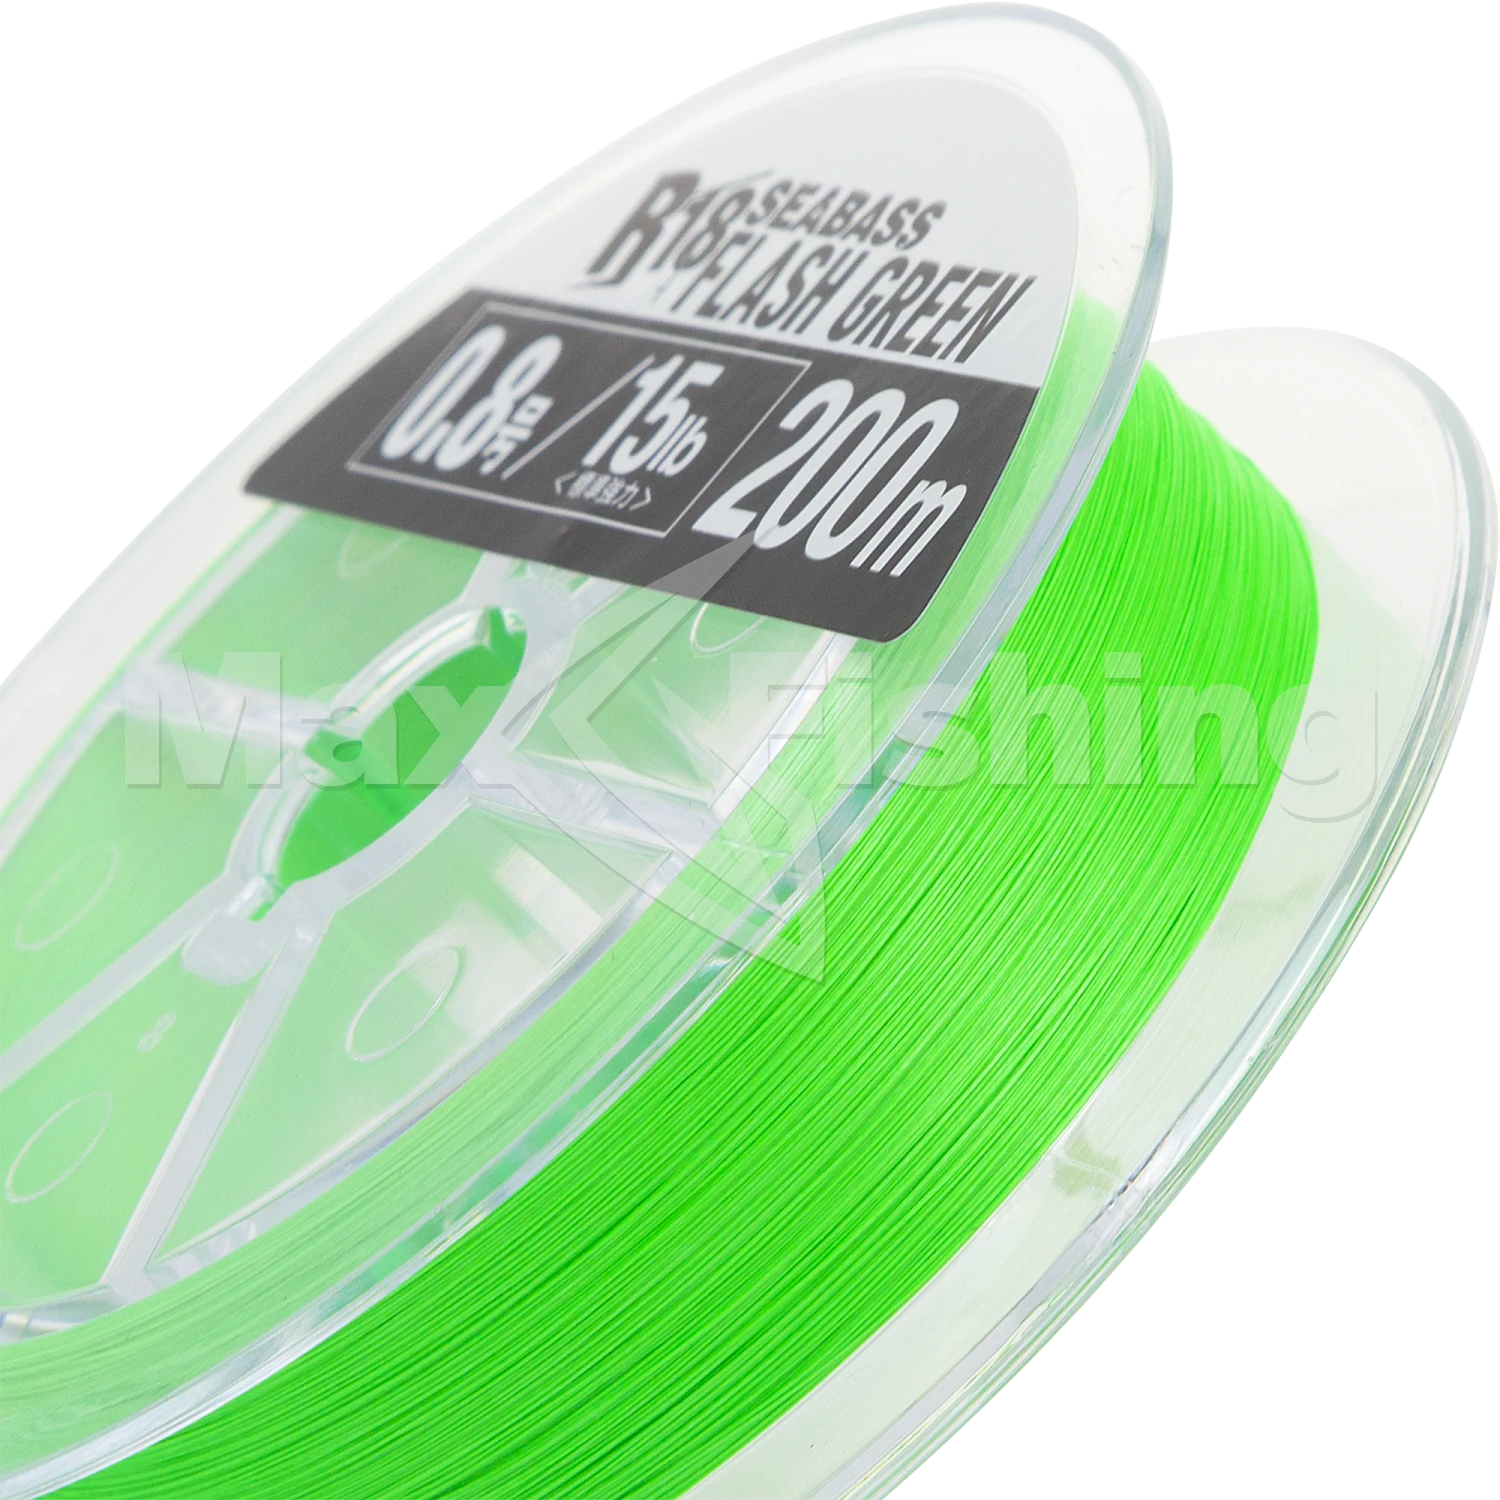 Шнур плетеный Seaguar R-18 Kanzen Seabass PE X8 #0,8 0,148мм 200м (flash green)